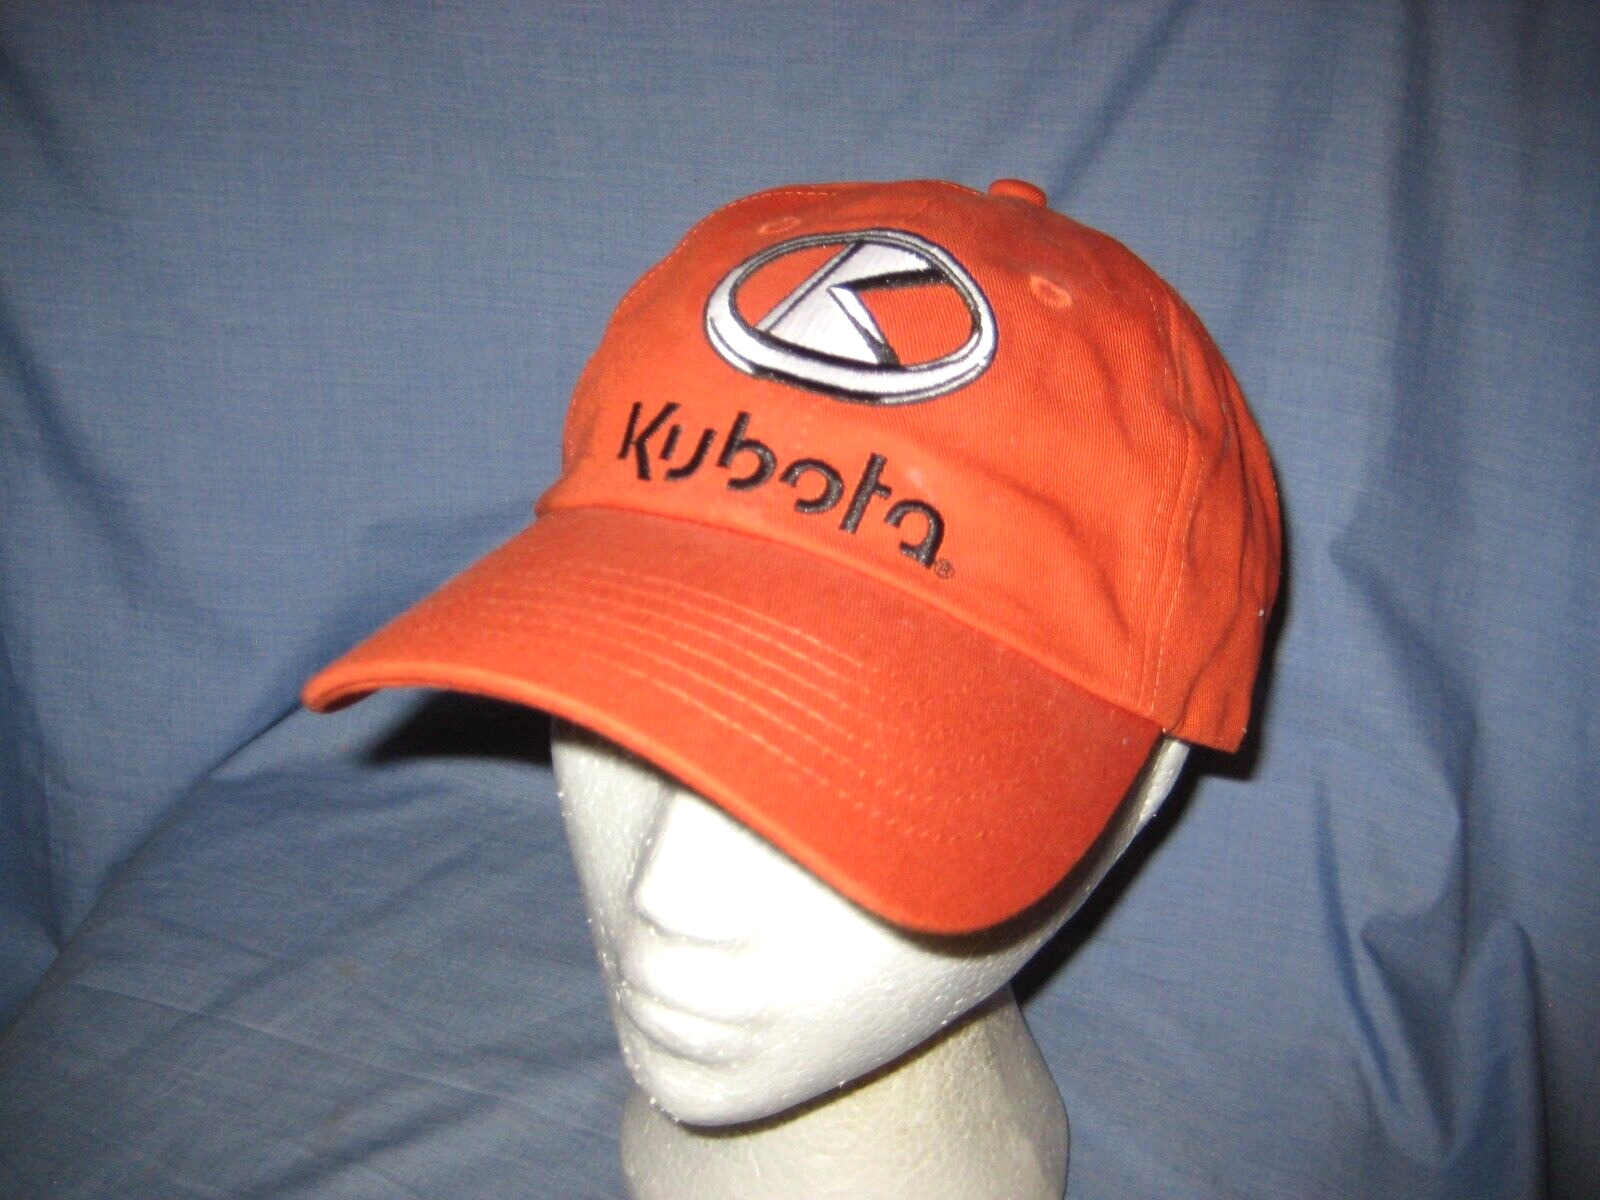 #3348L - ORANGE KUBOTA EQUIPMENT ADVERTISING BALL CAP, HAT - NICE